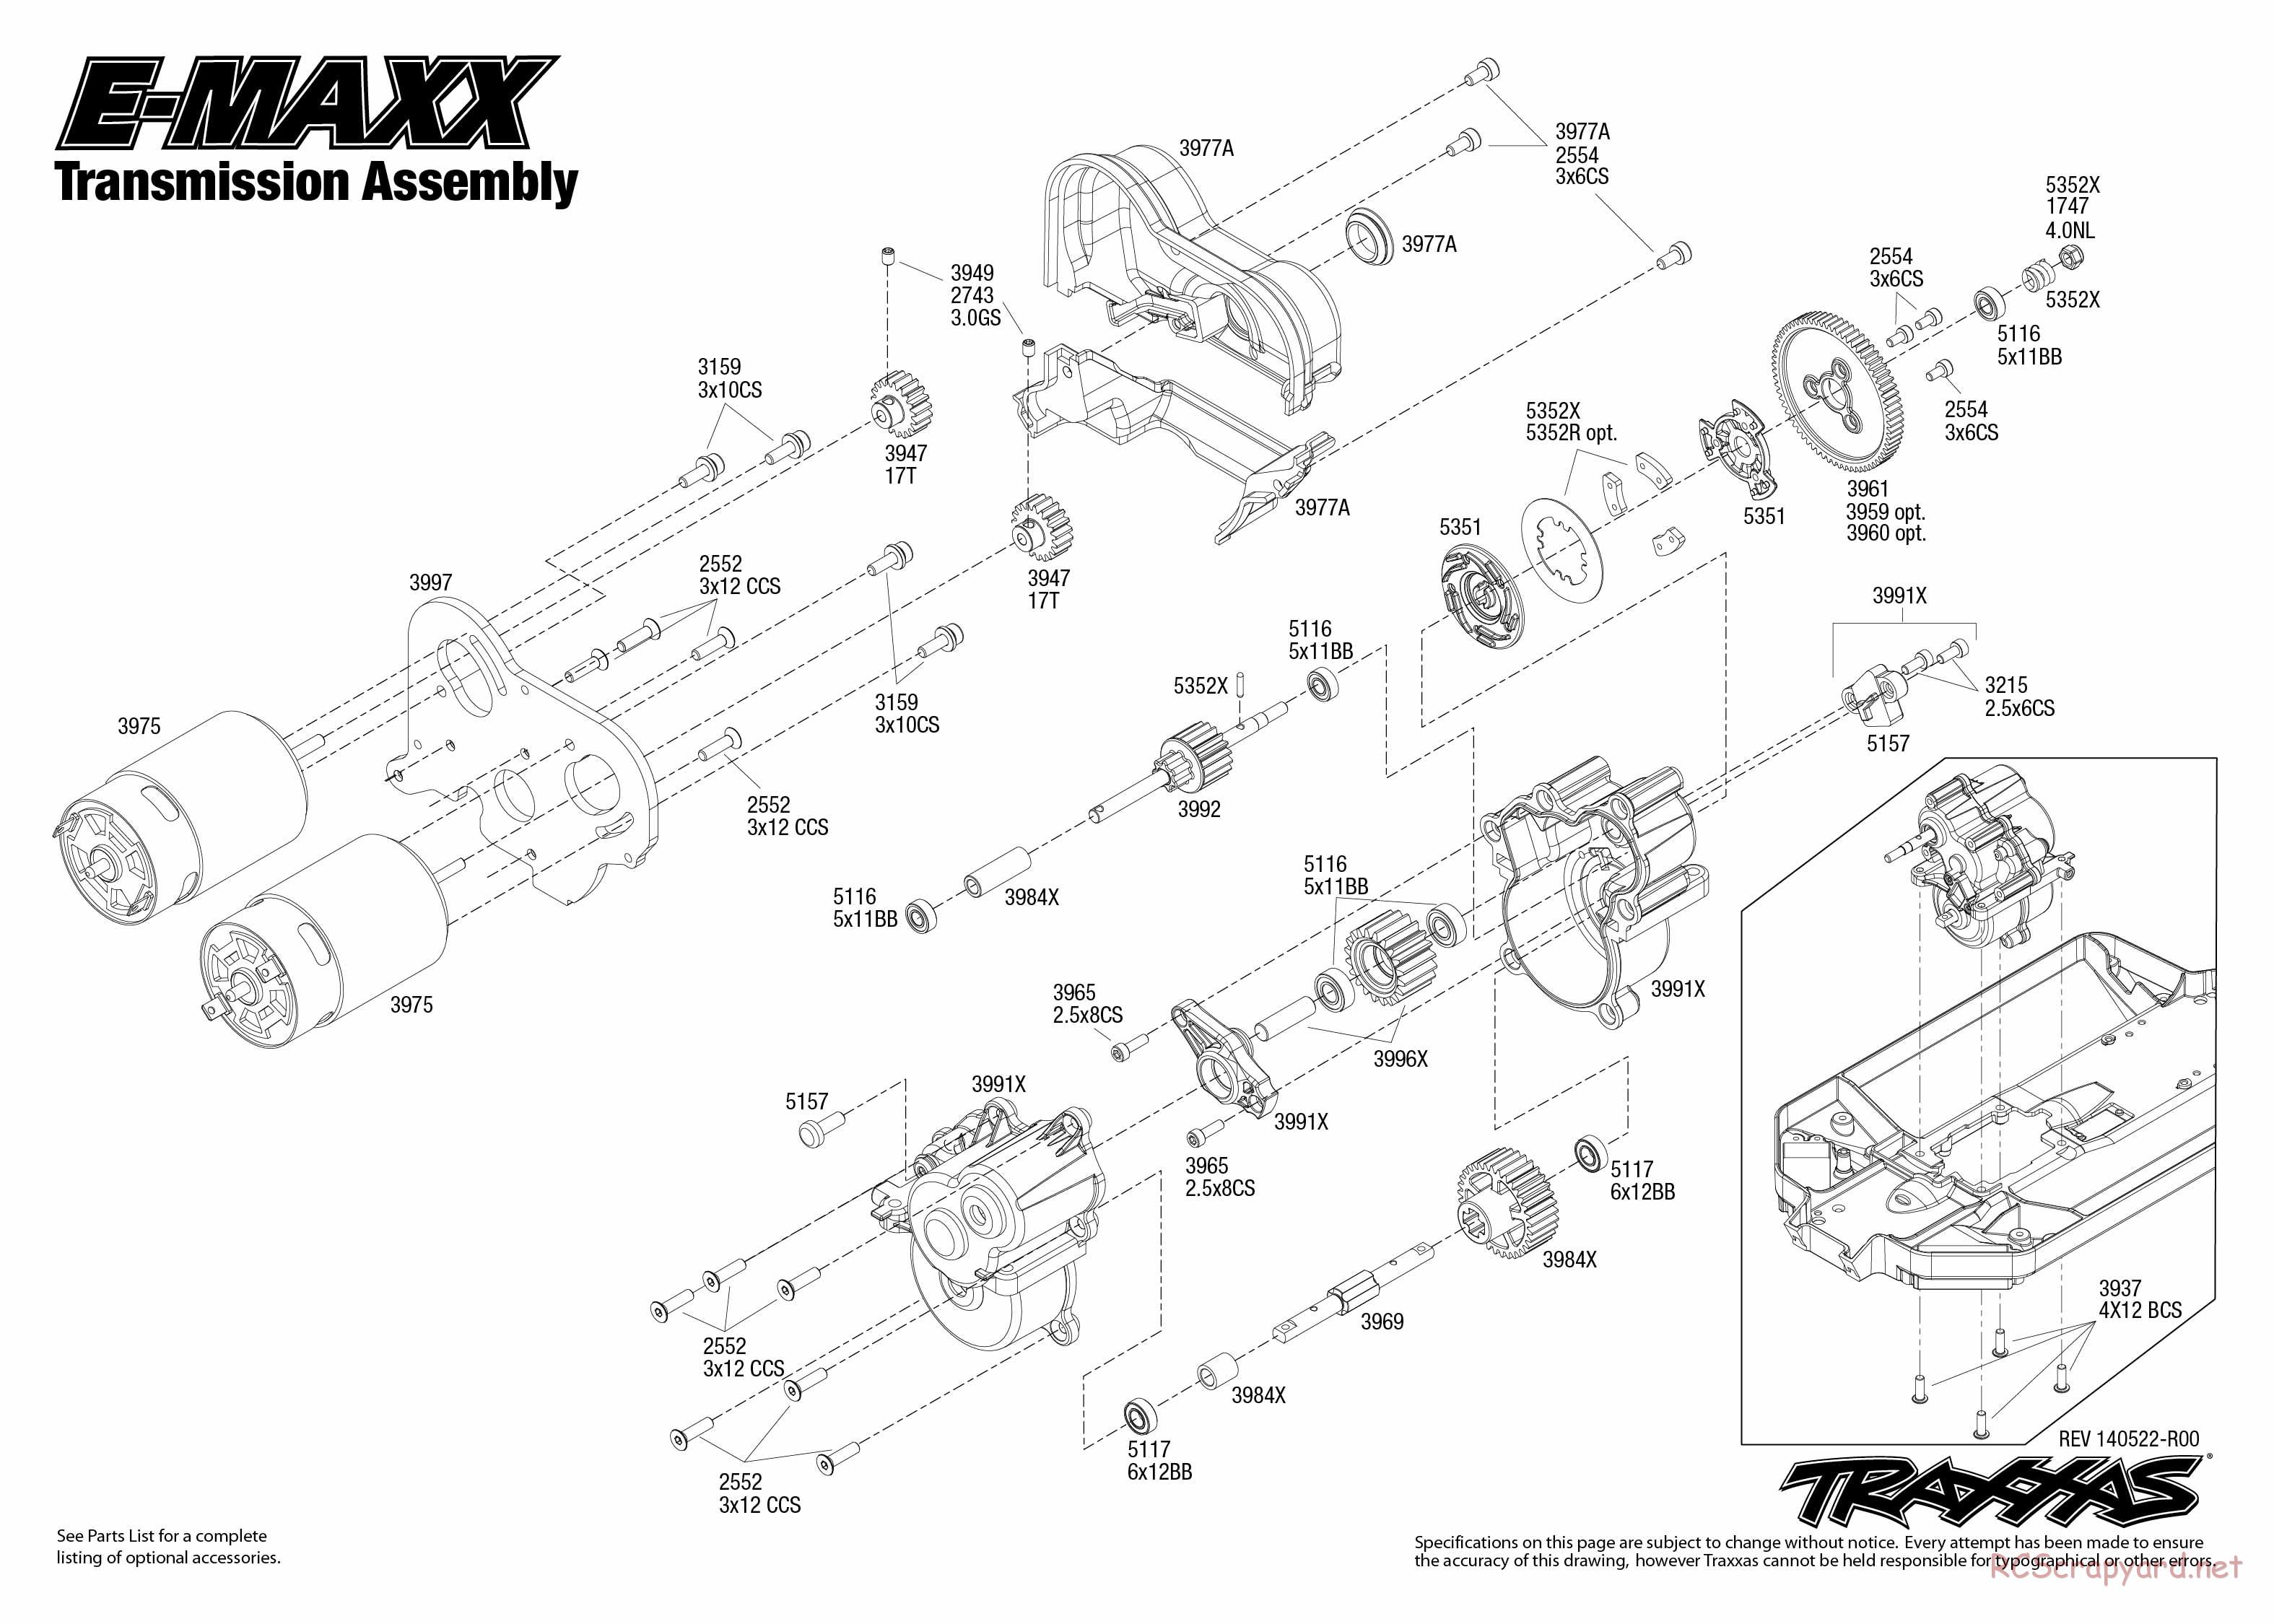 Traxxas - E-Maxx (2014) - Exploded Views - Page 5